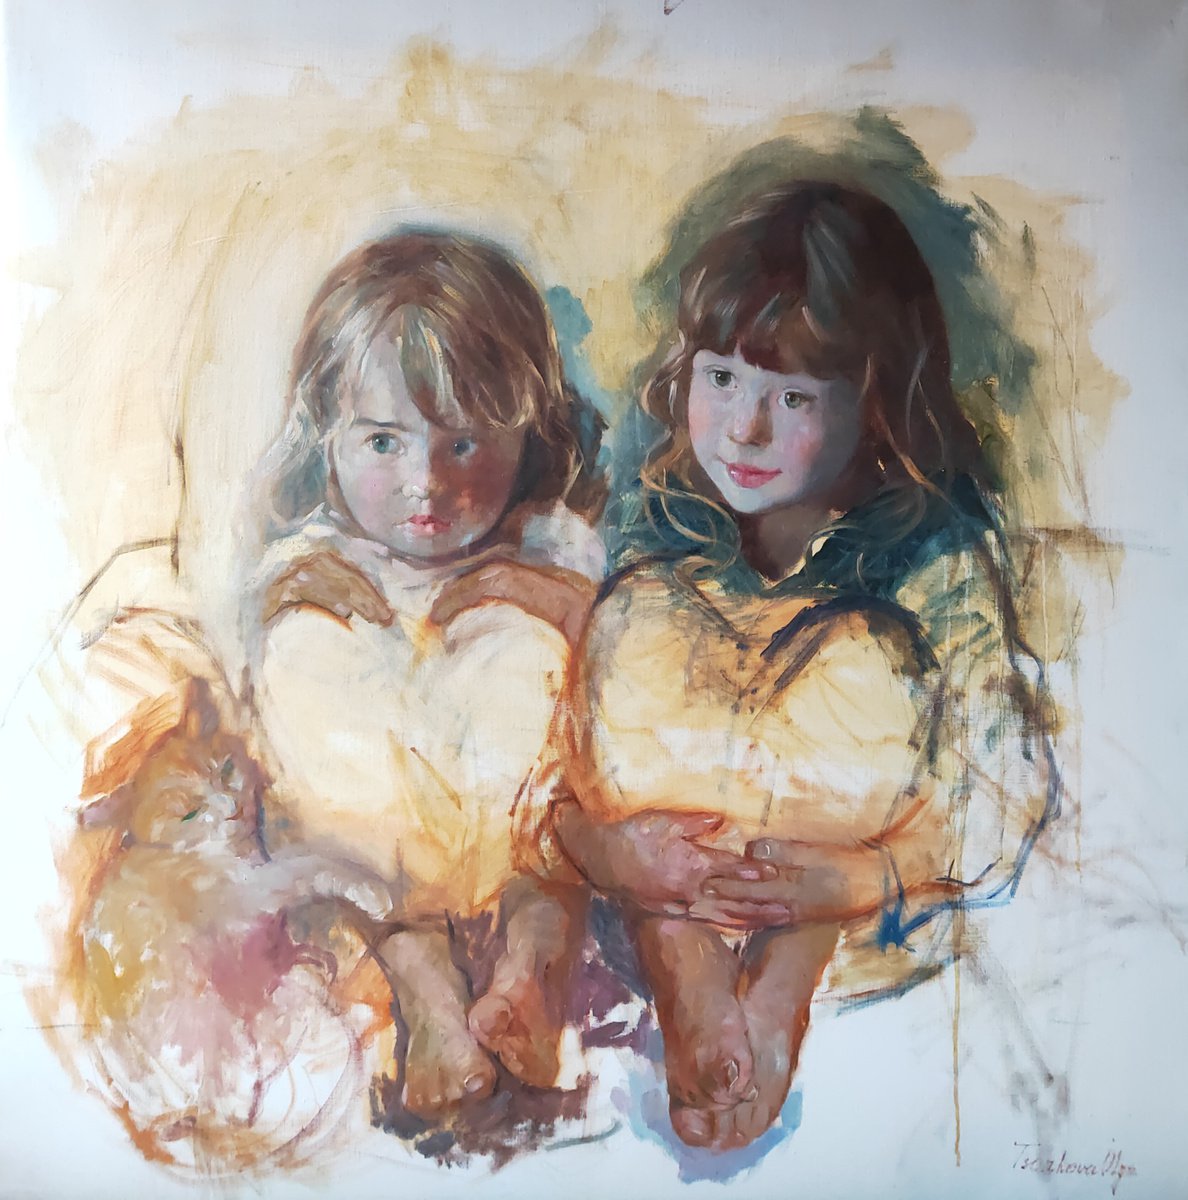 Two Sisters Painting Original Art 80 by 80 cm by Olga Tsarkova by Olga Tsarkova